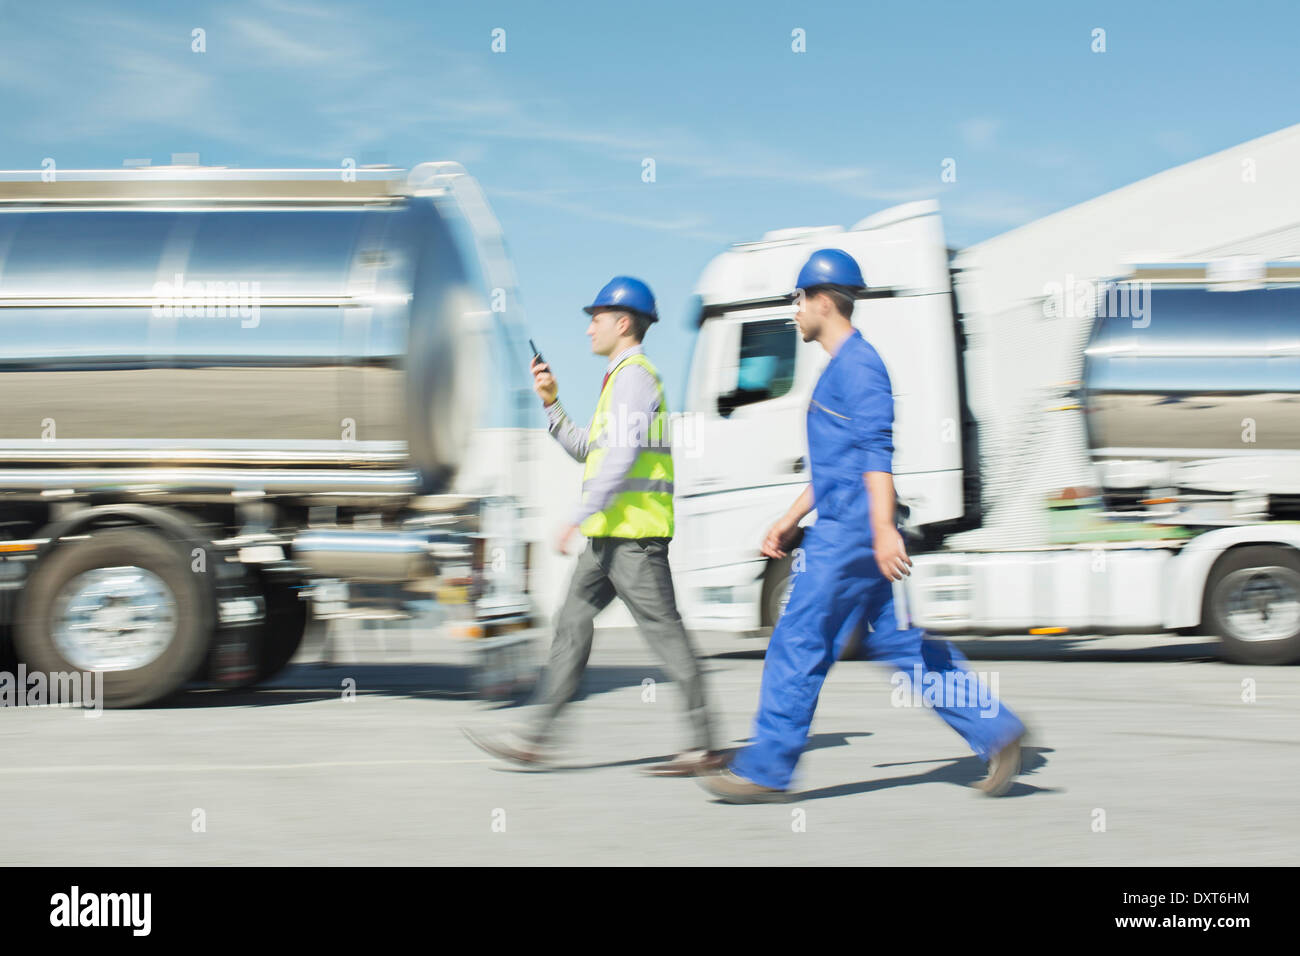 Workers walking past stainless steel milk tankers Stock Photo